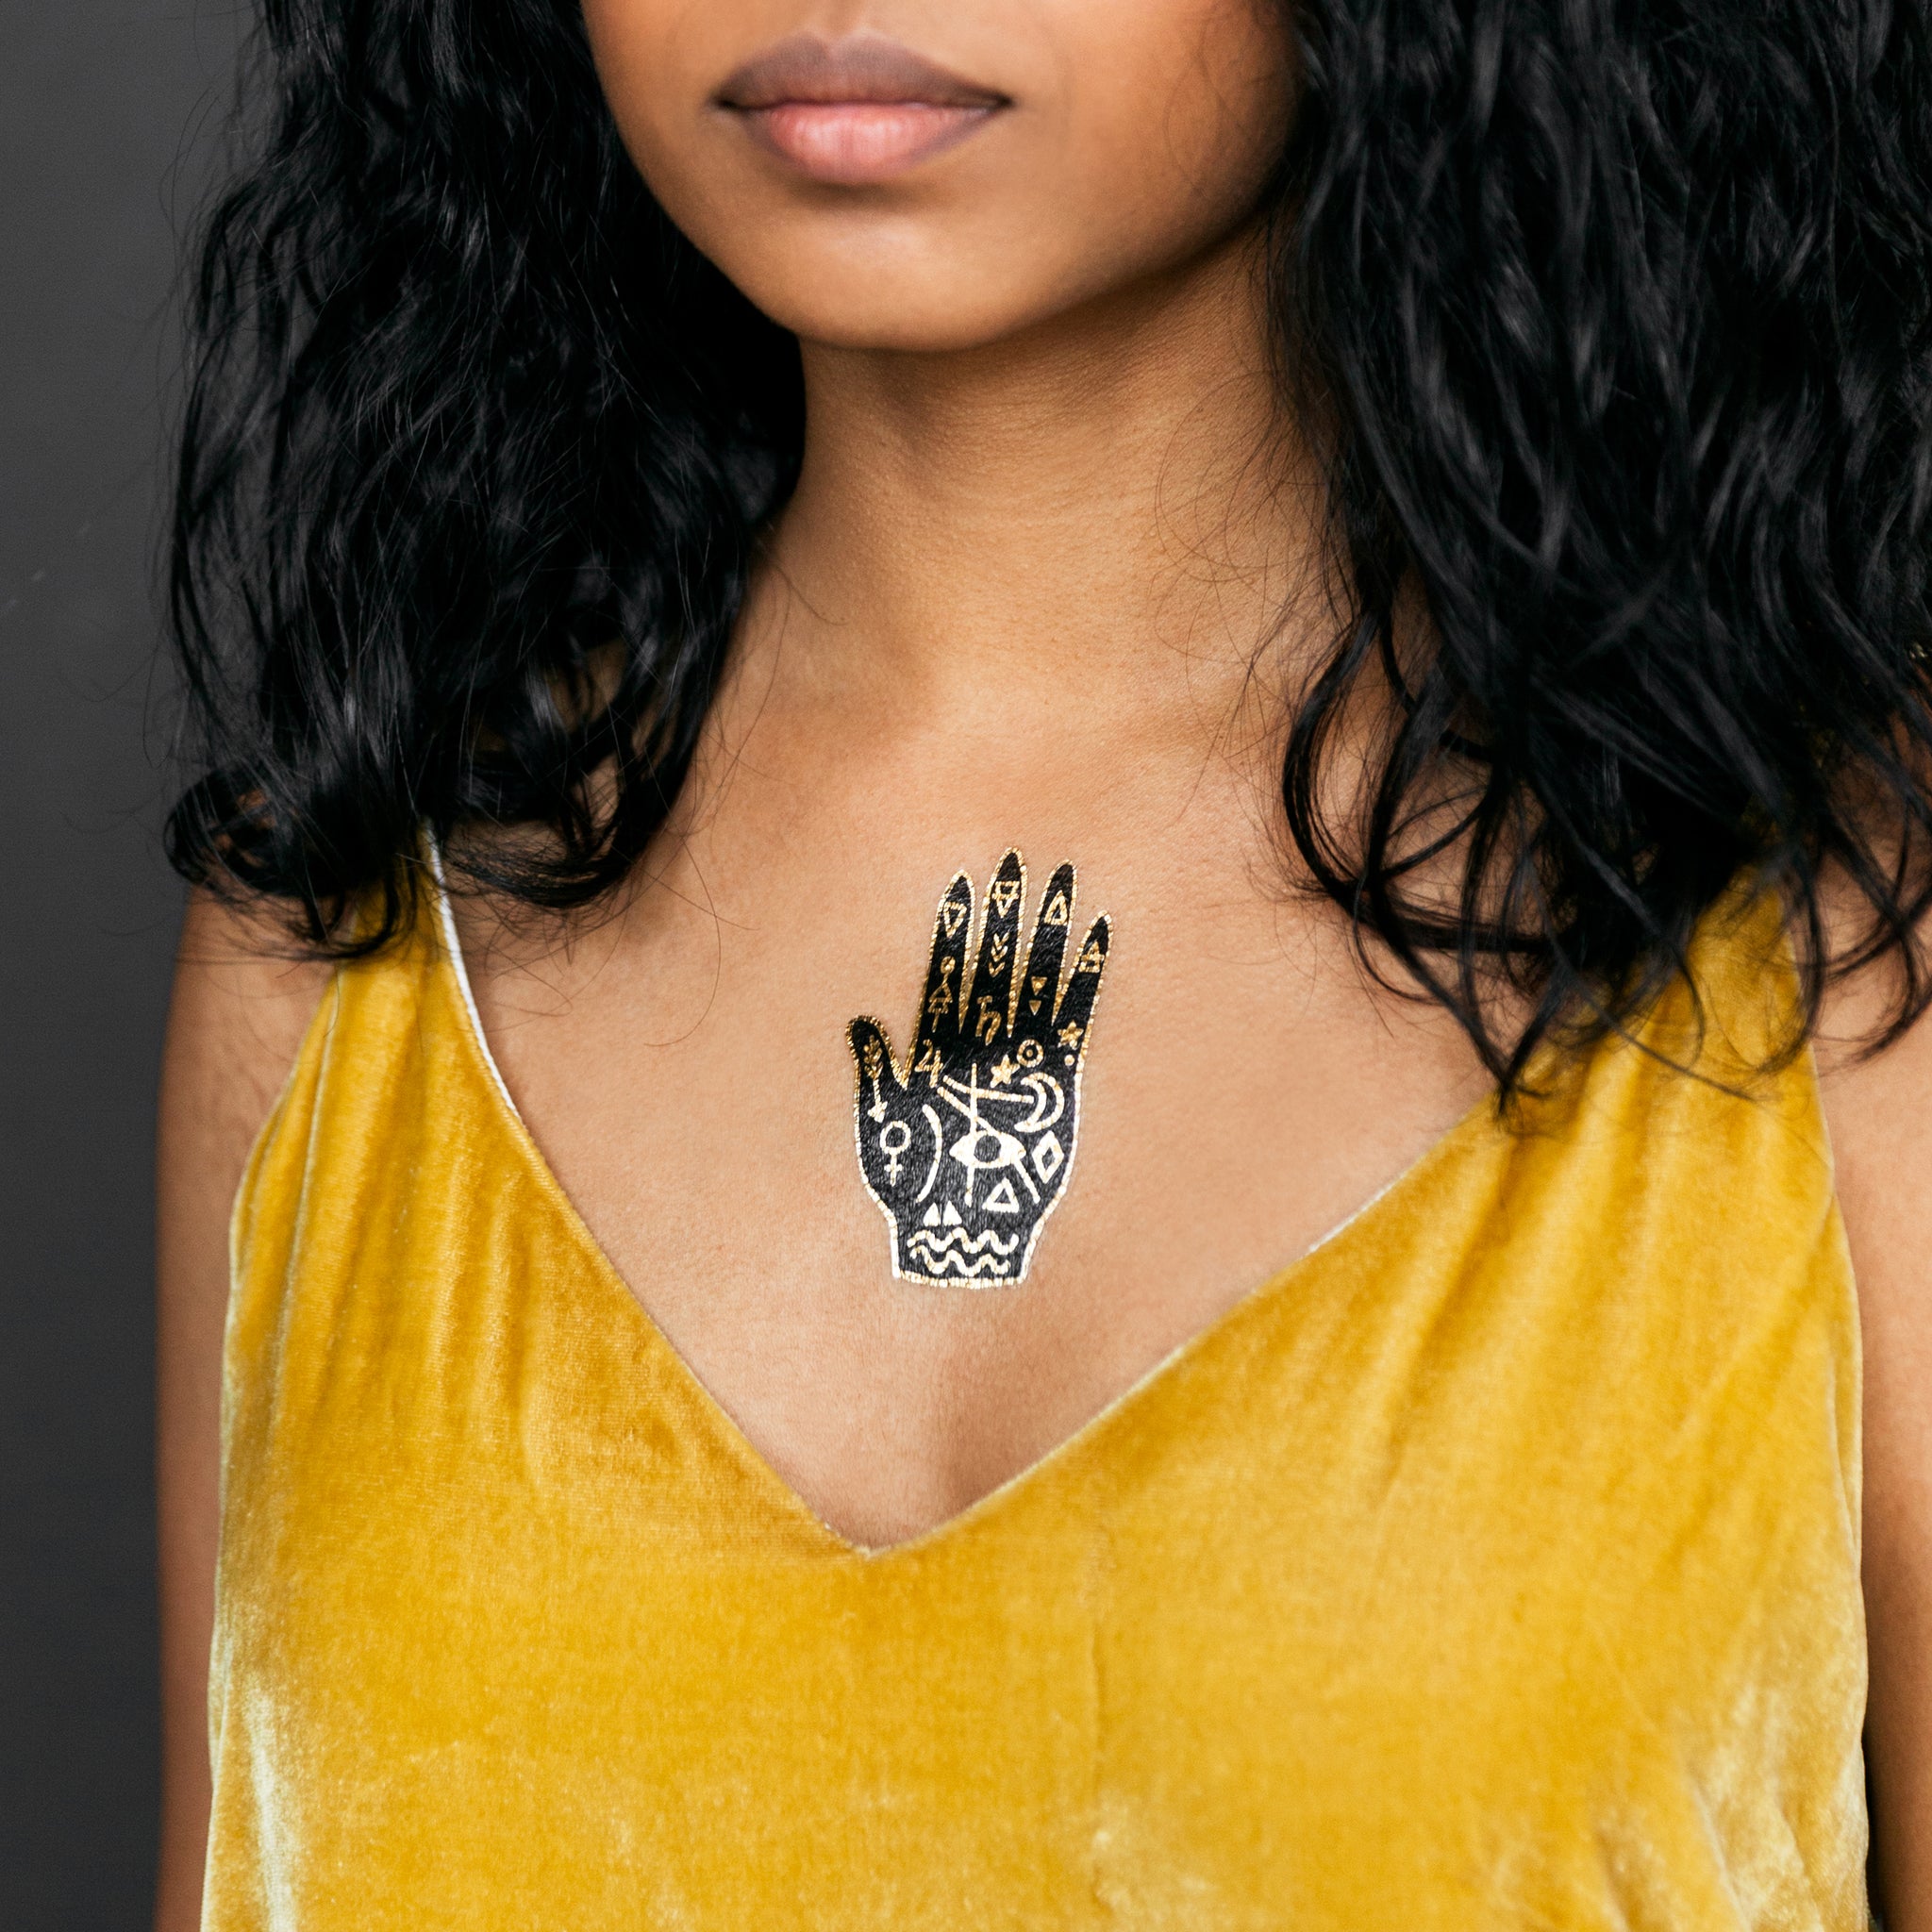 Temporary Tattoo For Girls Men Women 3D Hand Sticker Size 19x12CM - 1PC.  (35) & S.A.V.I 3D Temporary Tattoo Waterproof Sticker Beautiful Black  Wolverine Popular New Designs Size - 21x15cm (148), 4 g : Amazon.in: Beauty